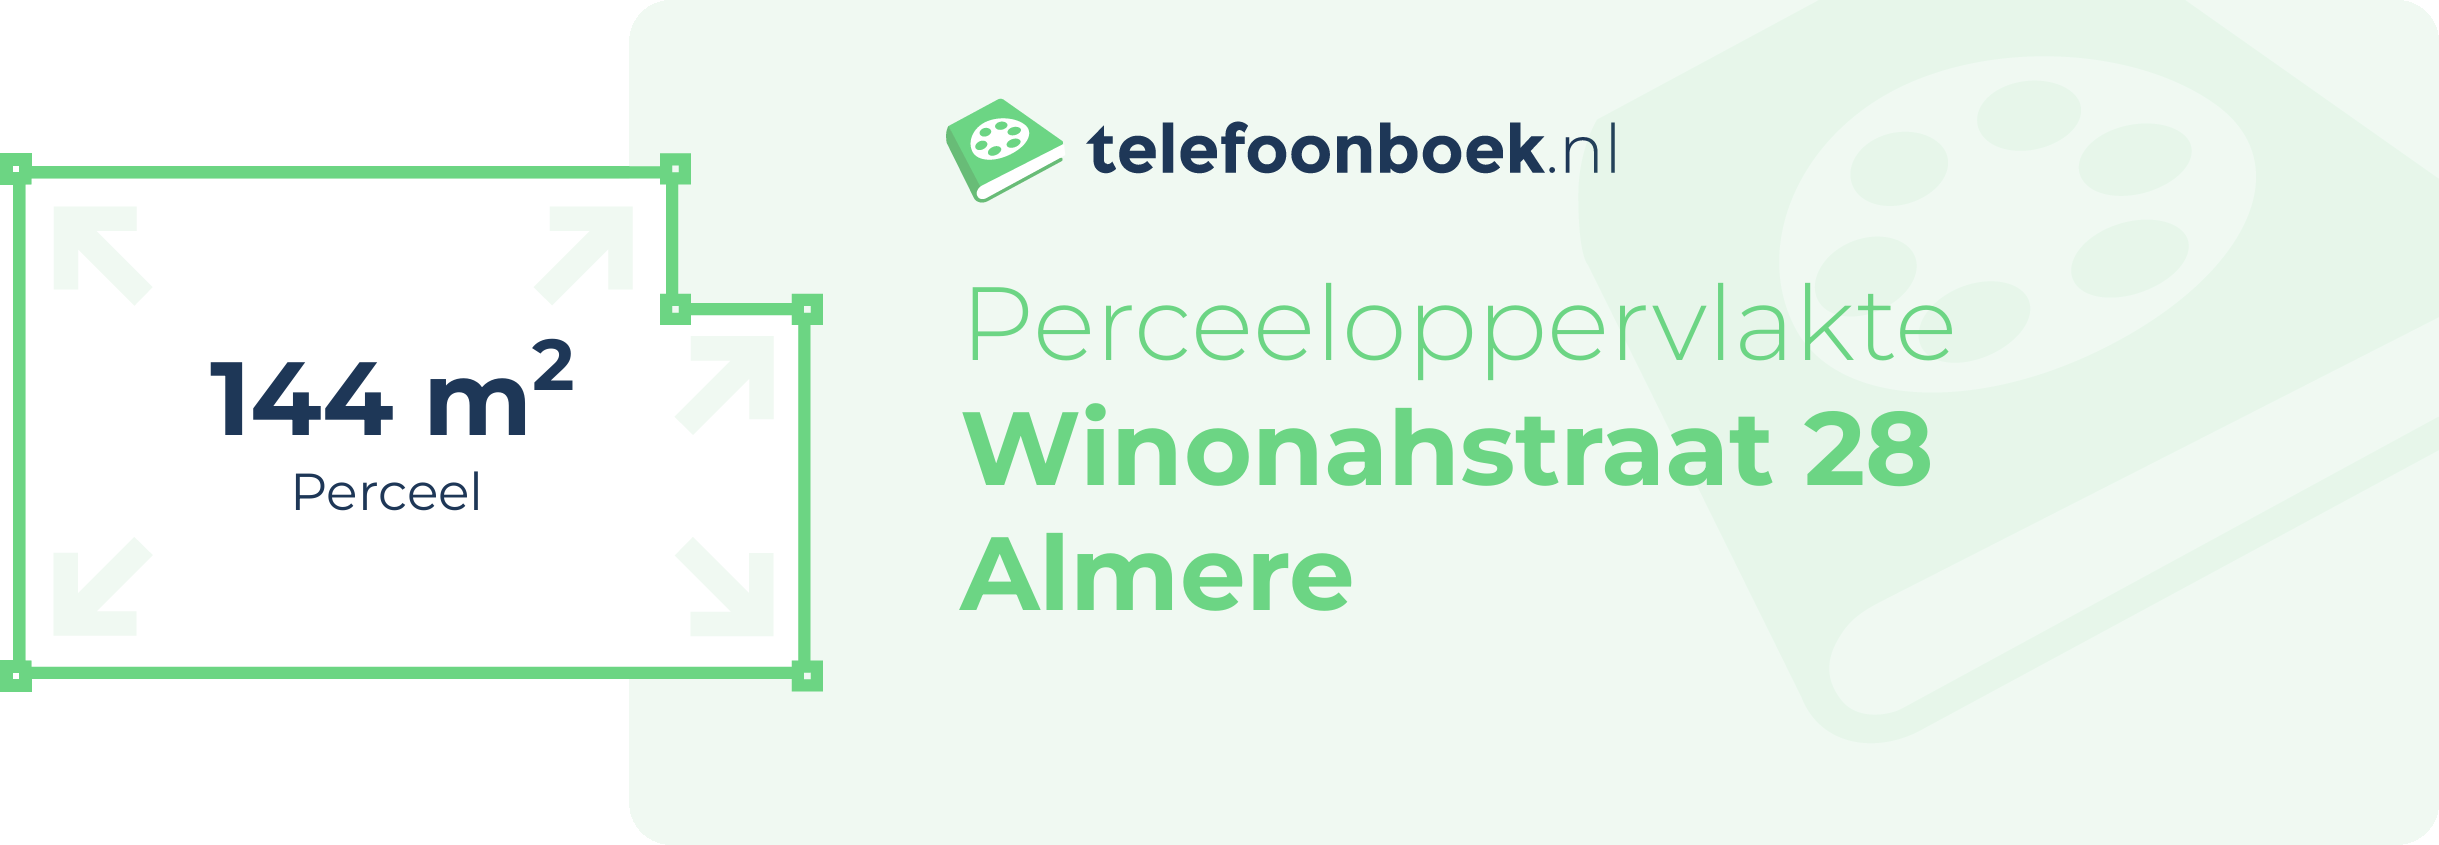 Perceeloppervlakte Winonahstraat 28 Almere